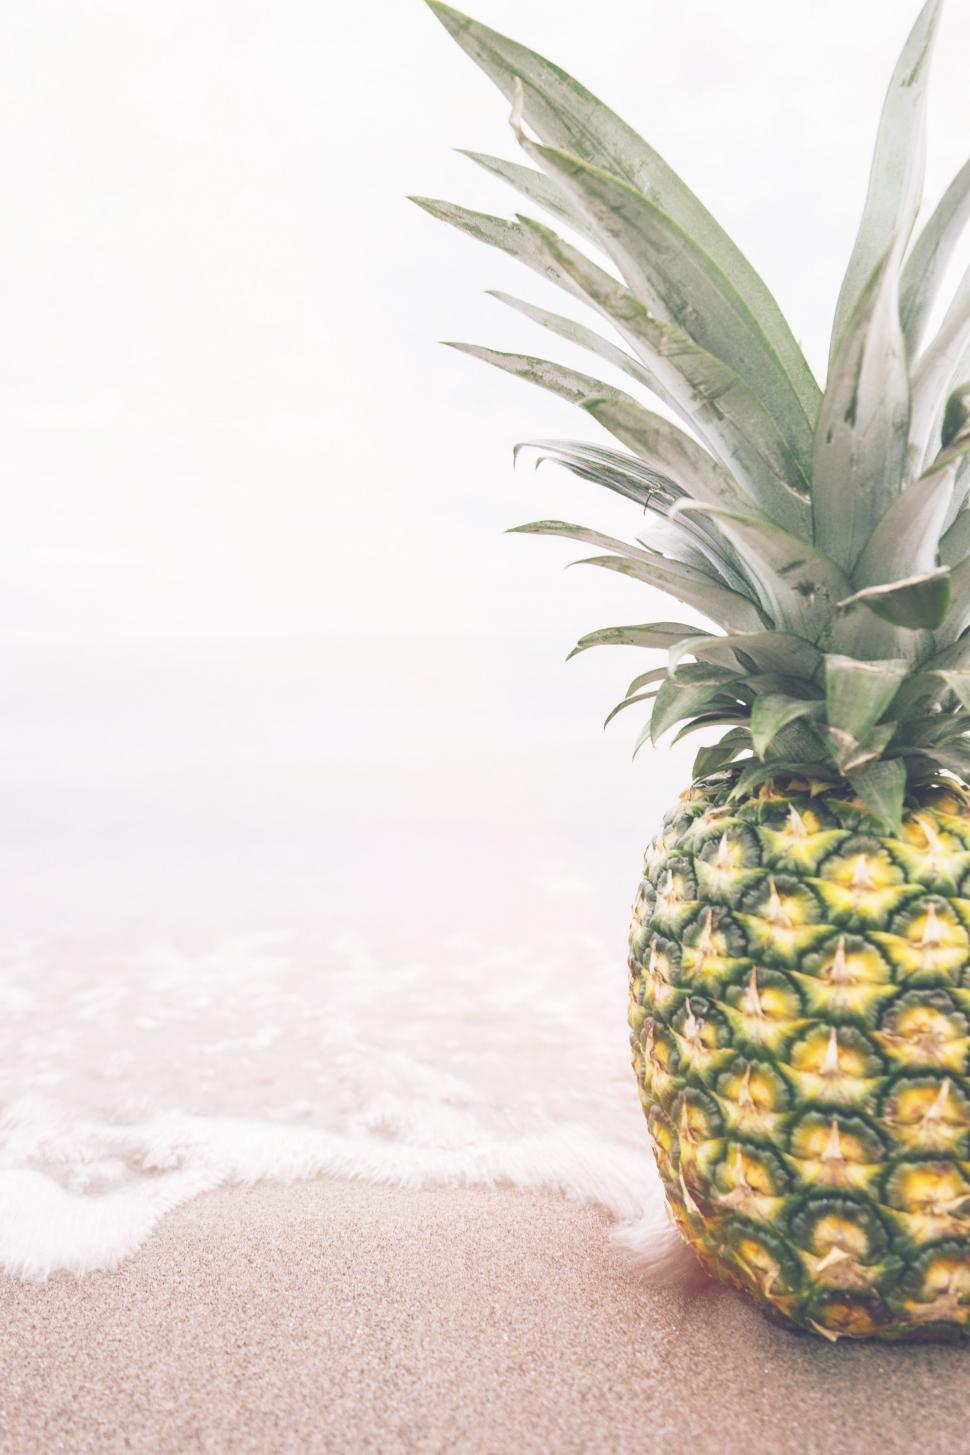 Free Image of Pineapple on Sandy Beach 